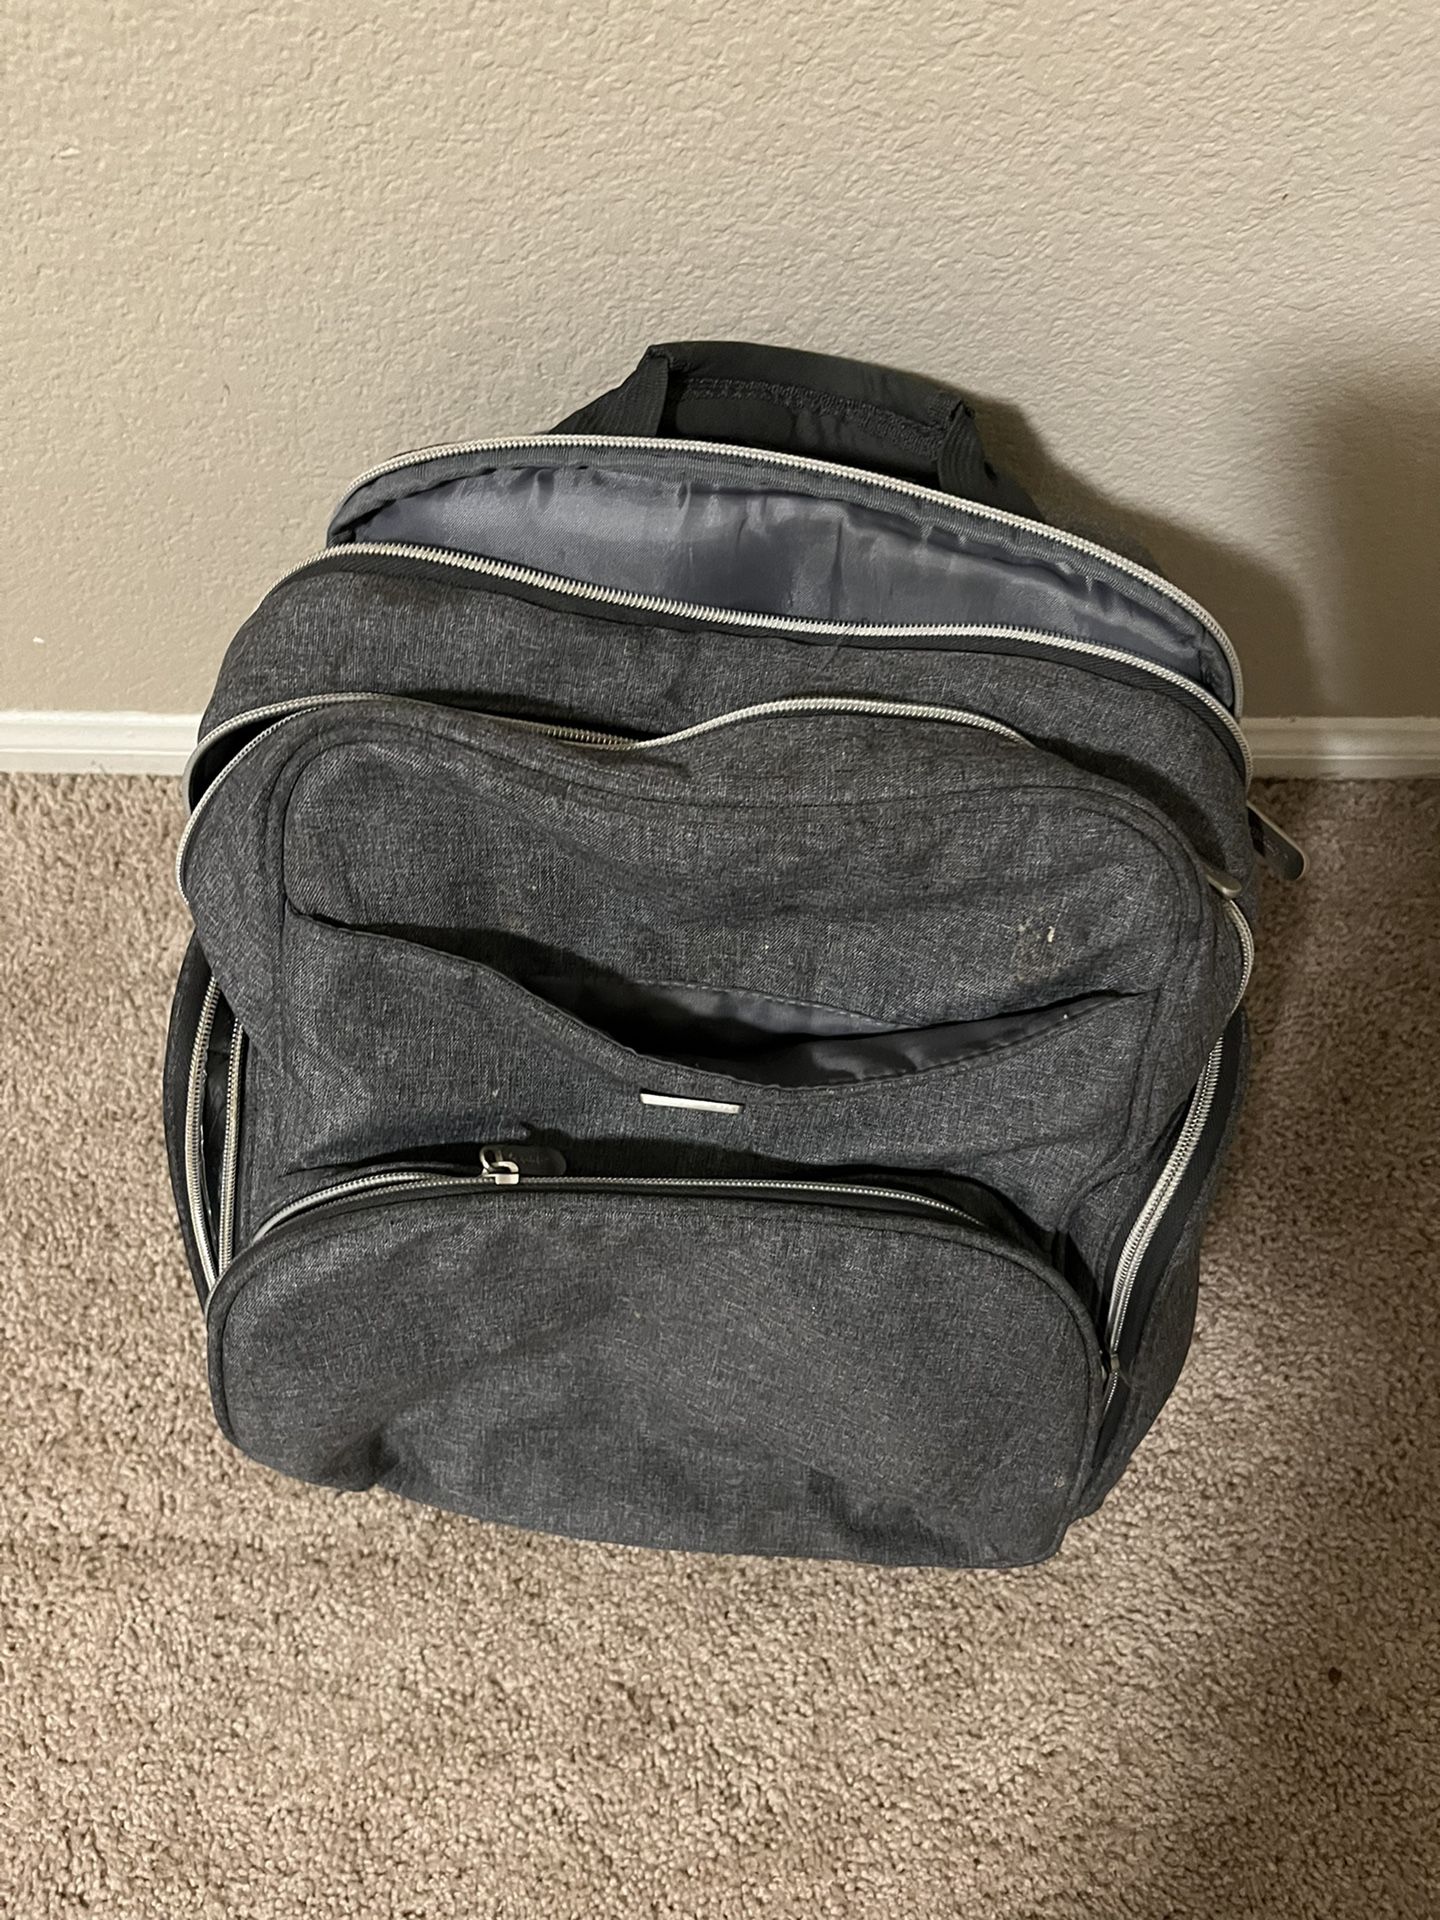 Newborn/ Infant Diaper Bag Backpack